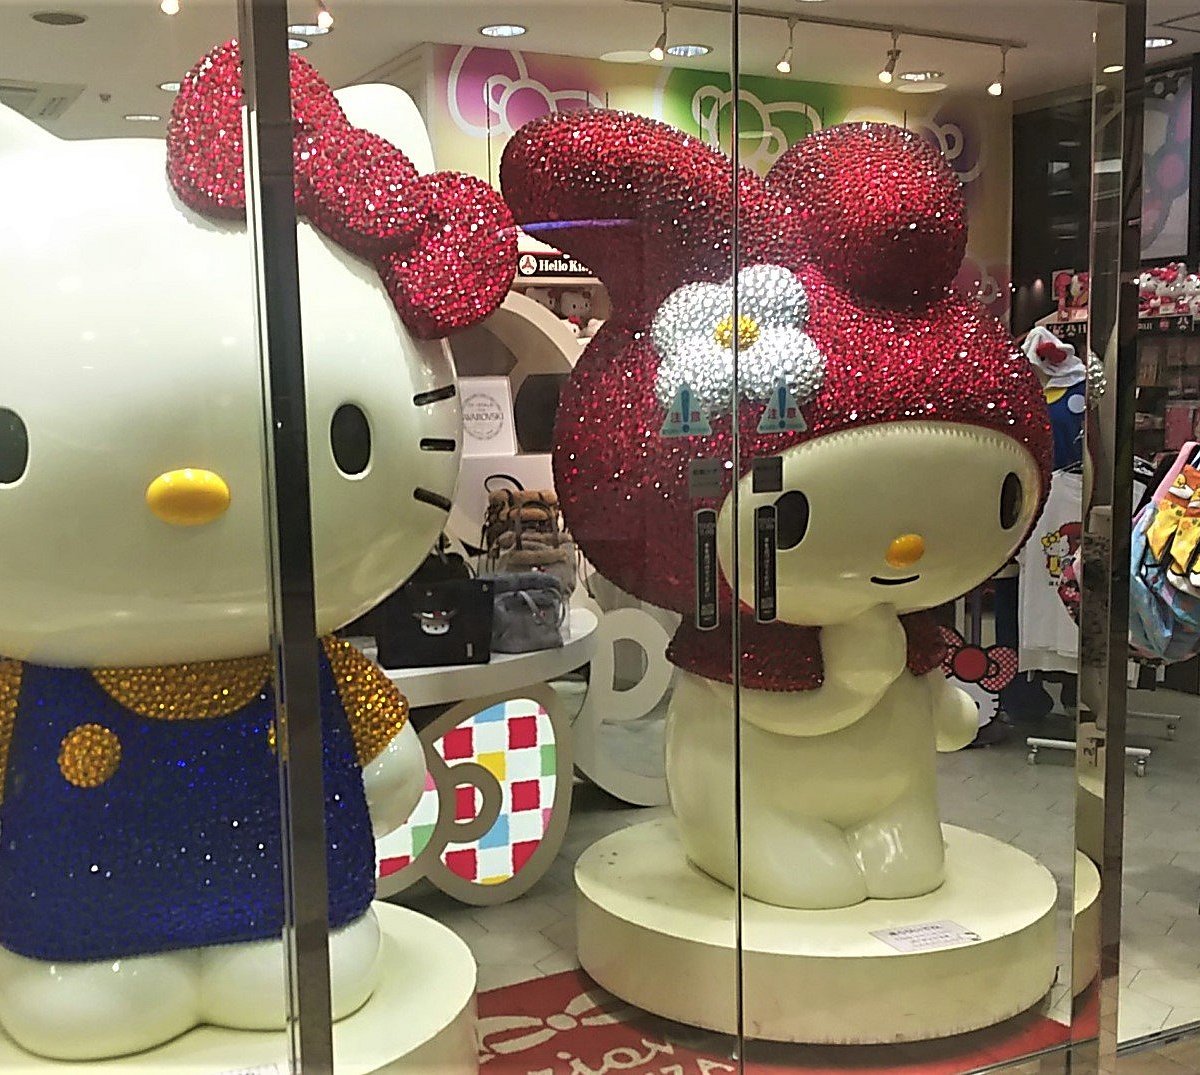 Sanrio World Ginza Store in Tokyo Japan  Hello kitty store, Sanrio store,  Sanrio